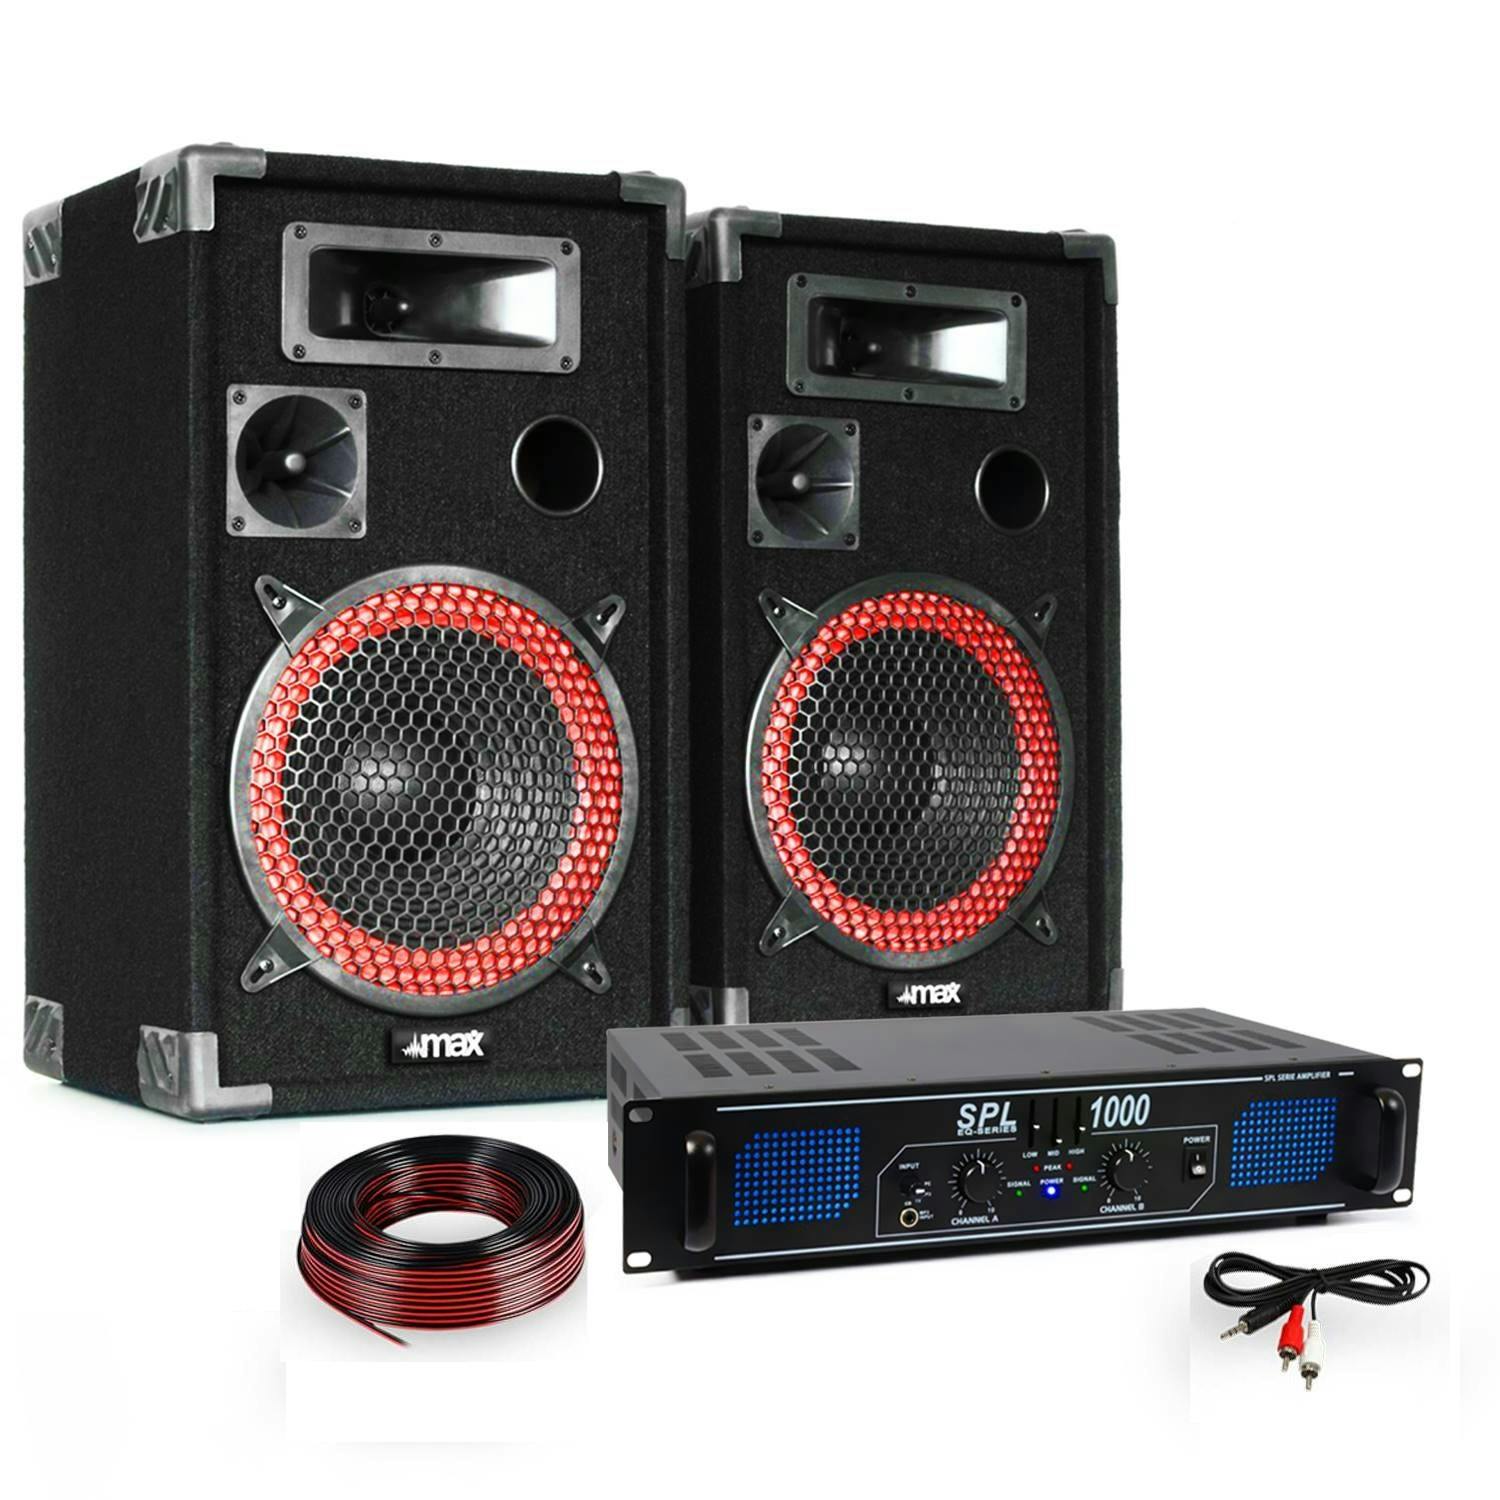 PACK SONO DJ AMPLI 2960W + 2 ENCEINTES 1000W + MIXAGE - Pack sono